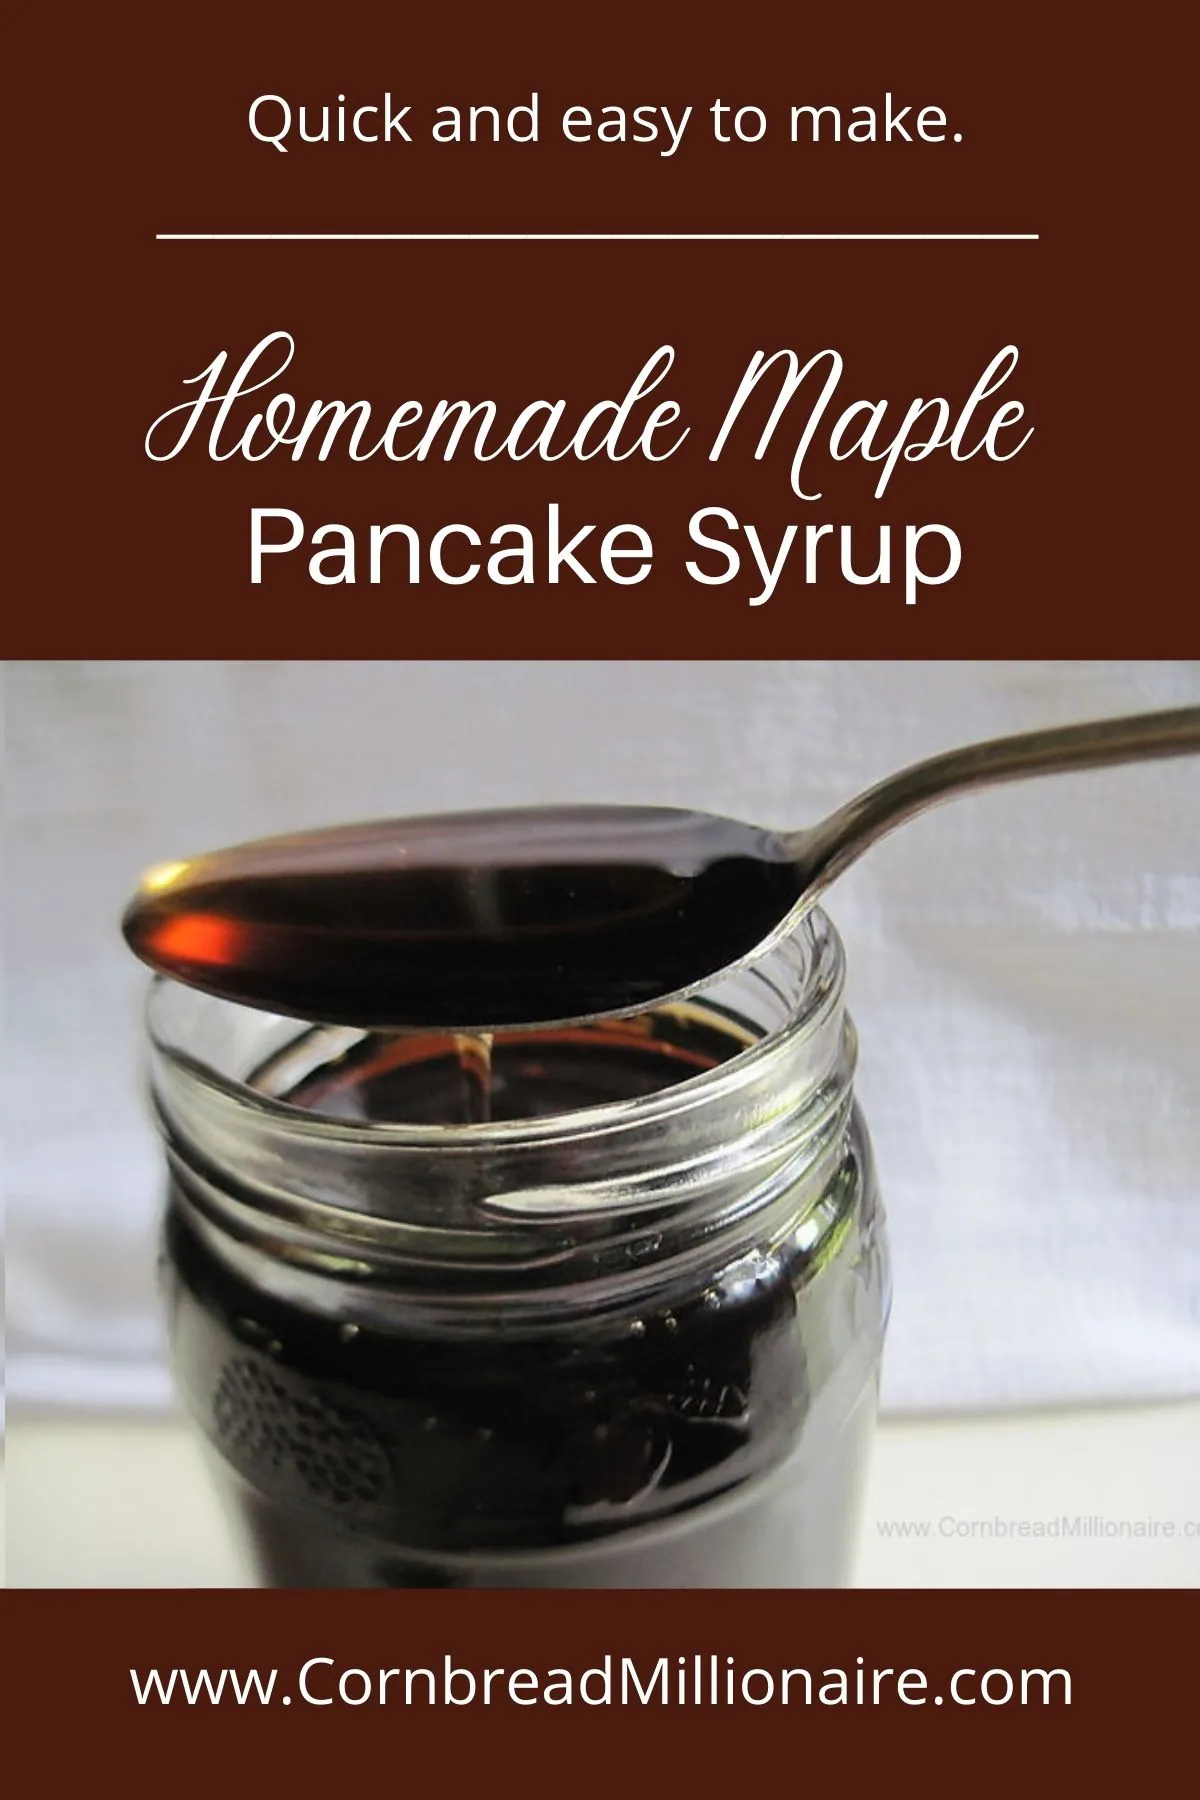 Homemade Maple Pancake Syrup